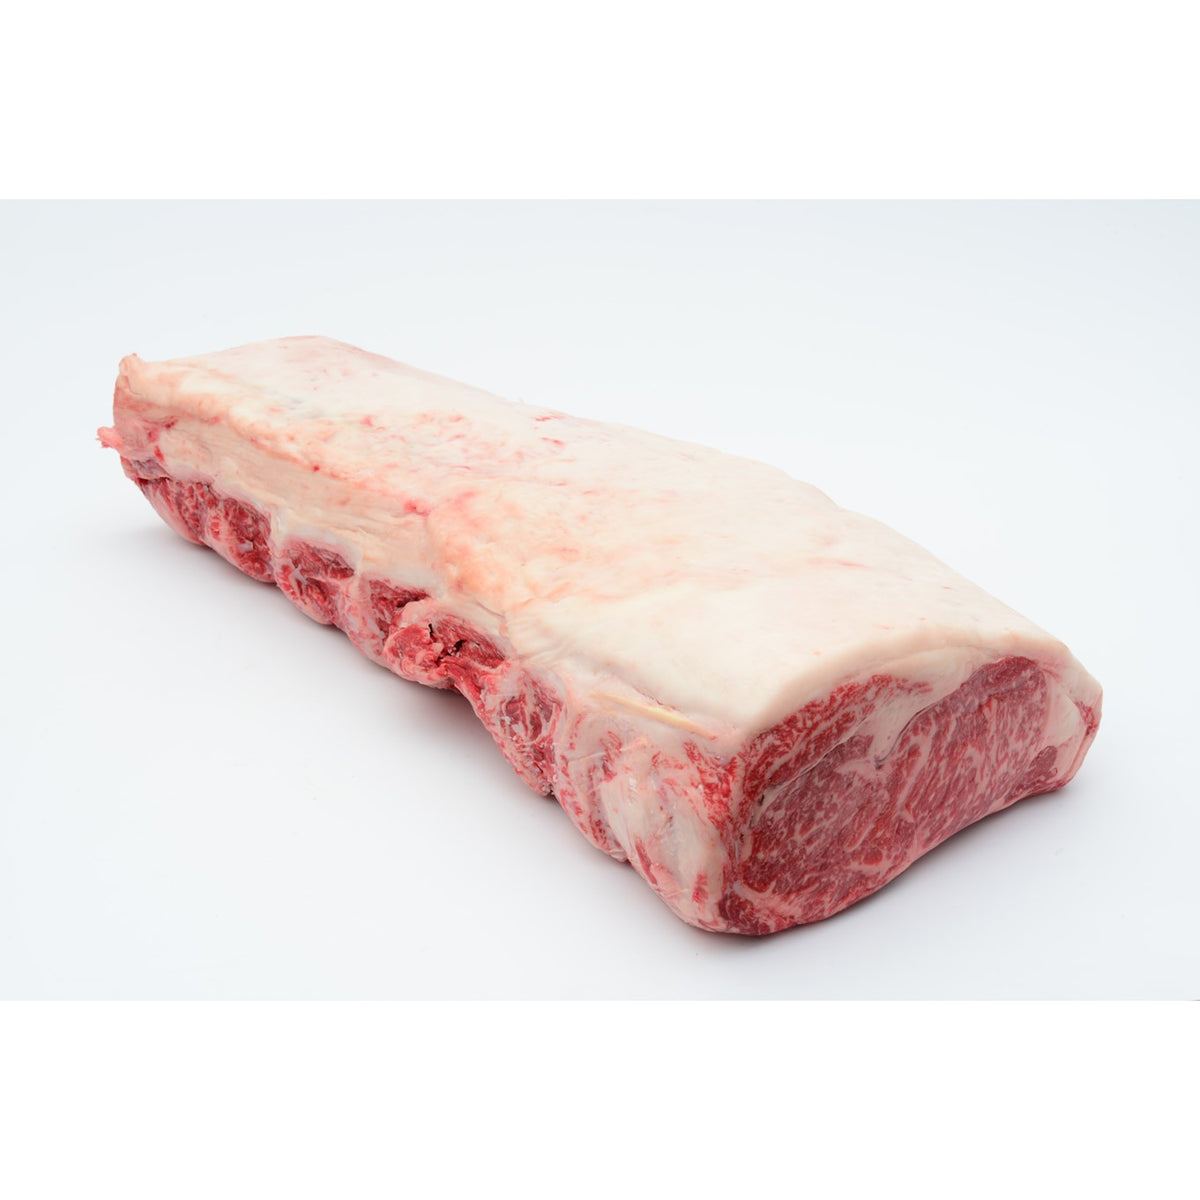 A4 和牛サーロインステーキ / A4 Wagyu Strip Loin steak（200g）